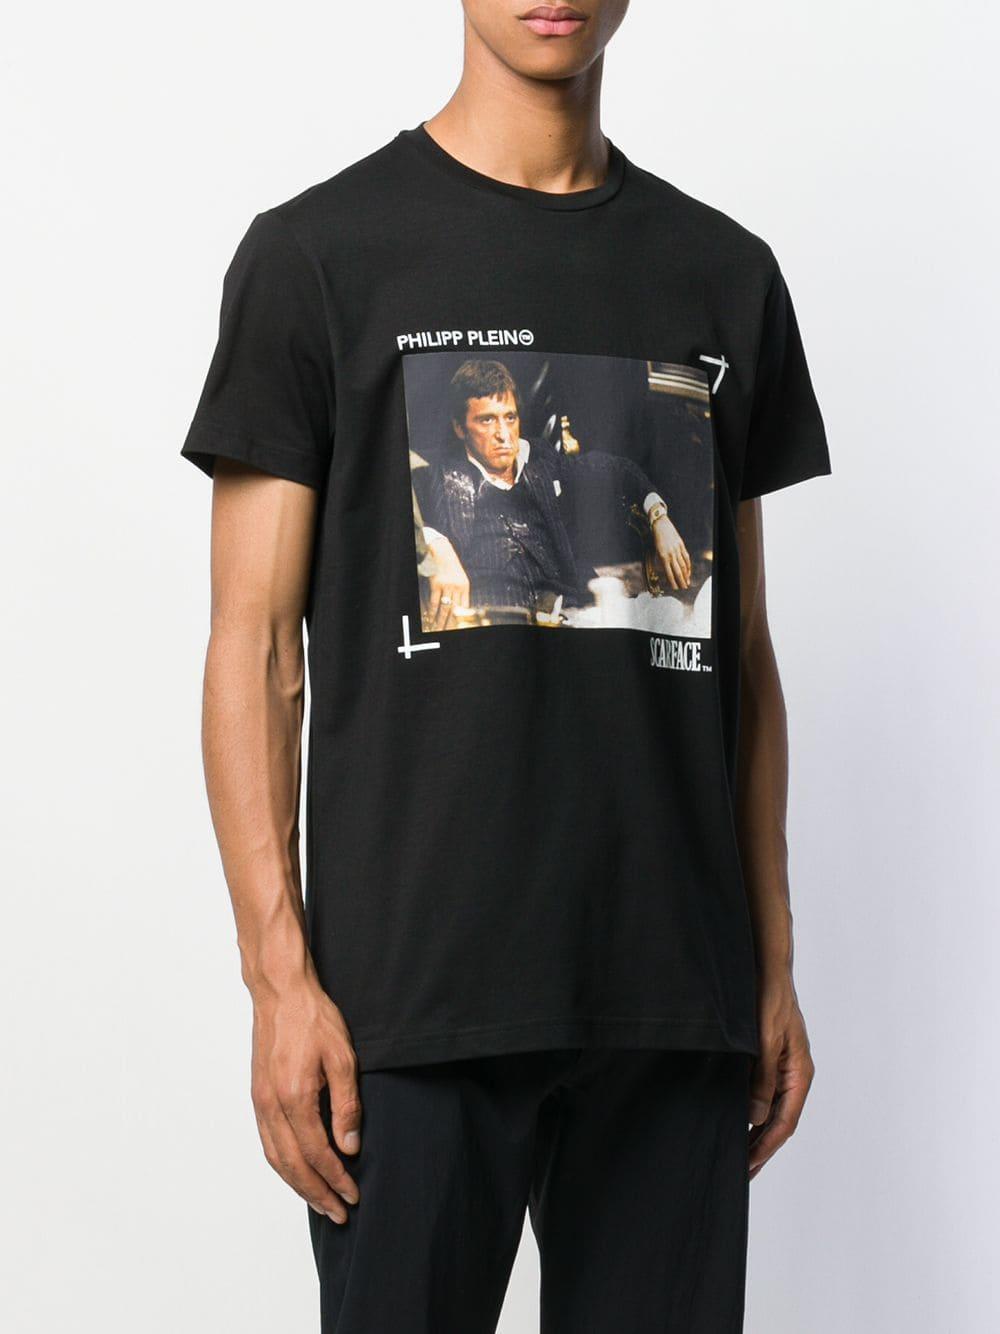 Philipp Plein Cotton Scarface T-shirt in Black for Men - Lyst